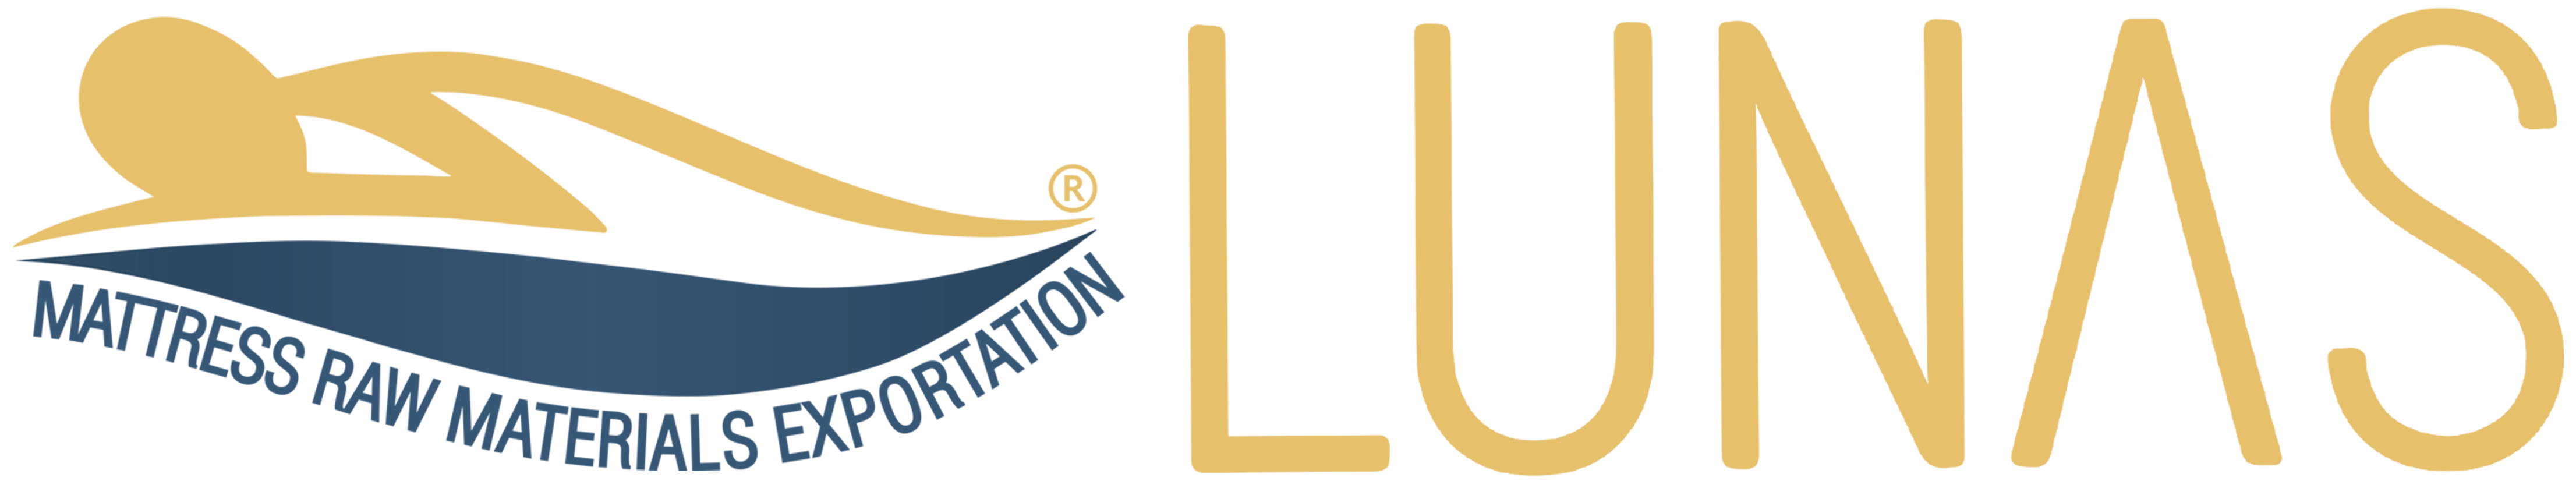 Lunas Yatak Logo